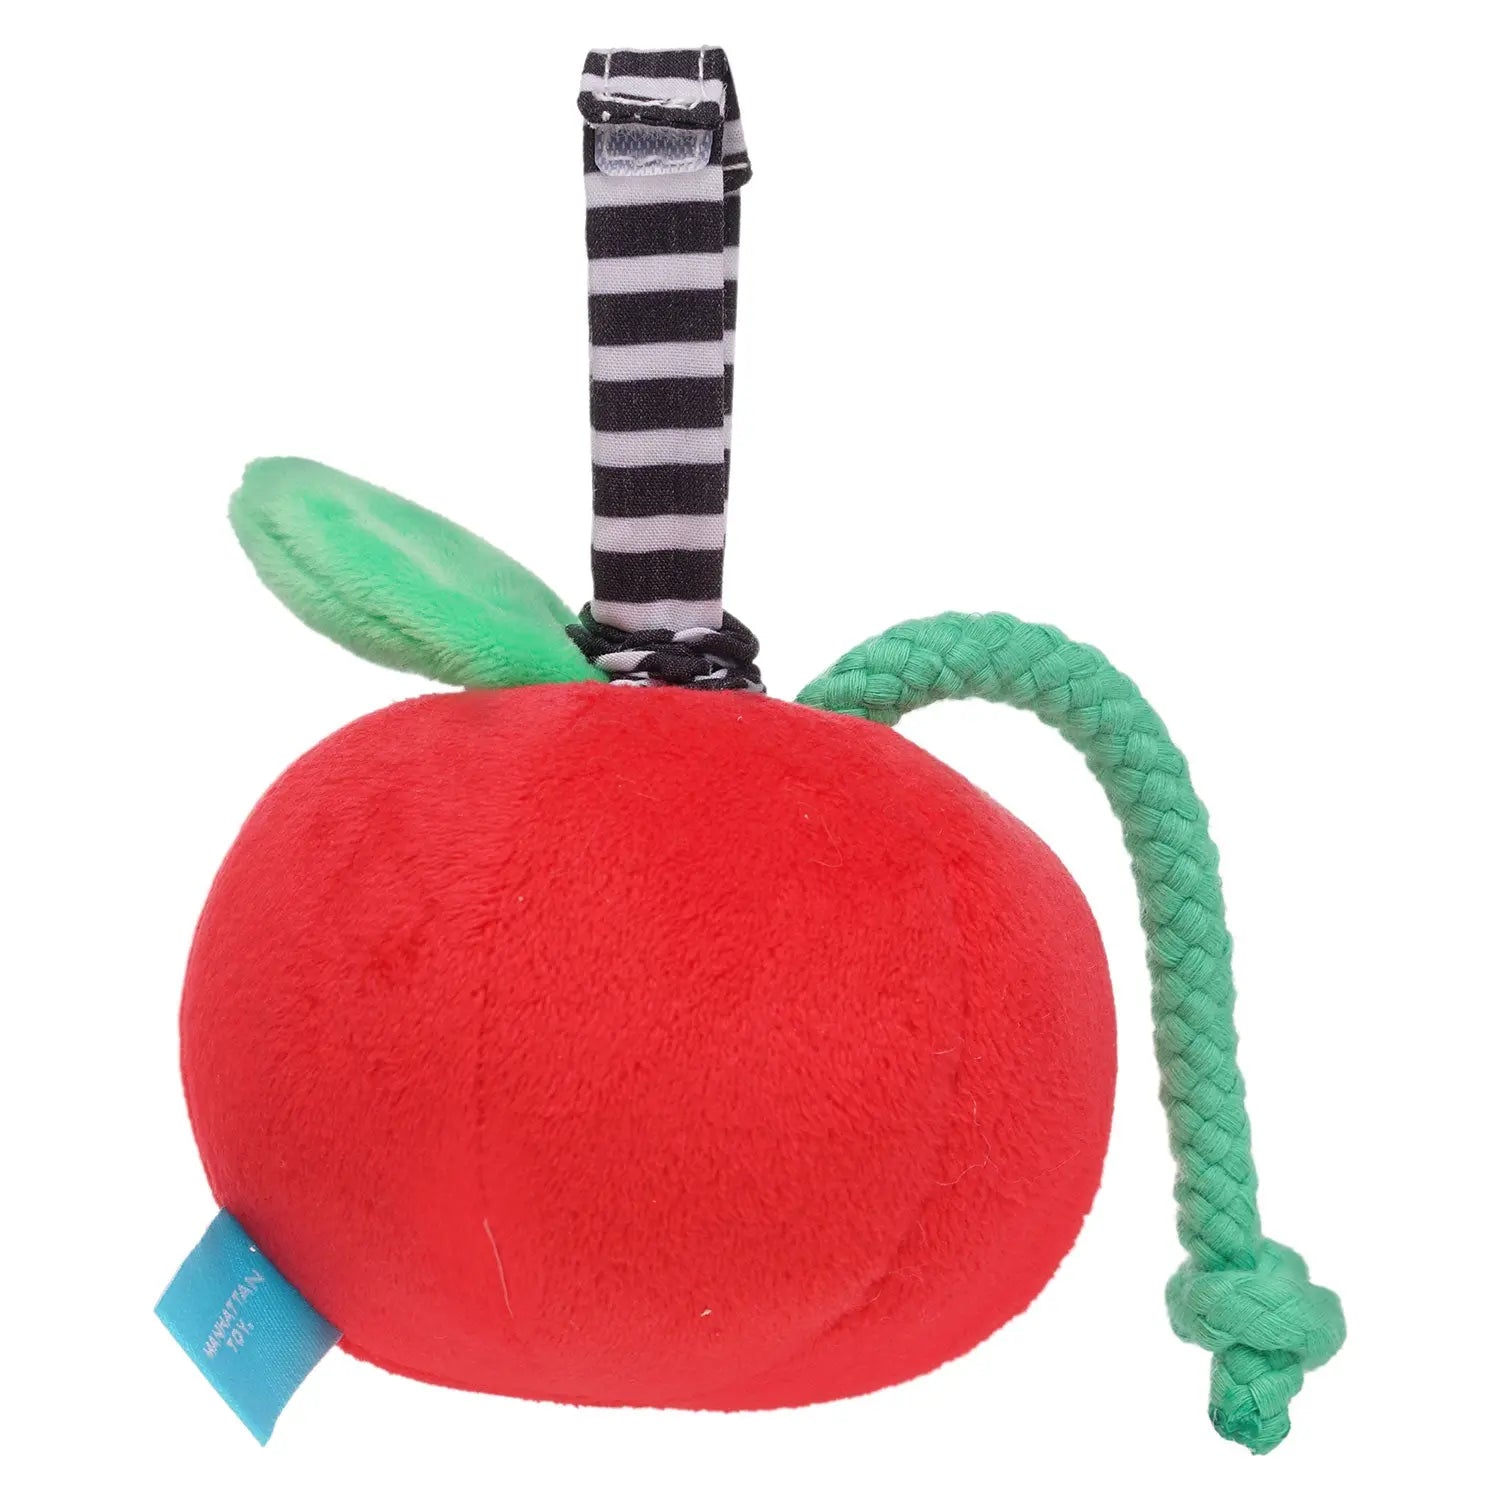 Manhattan Toy Mini-Apple Farm Cherry Pull Musical Musical Pull Toys